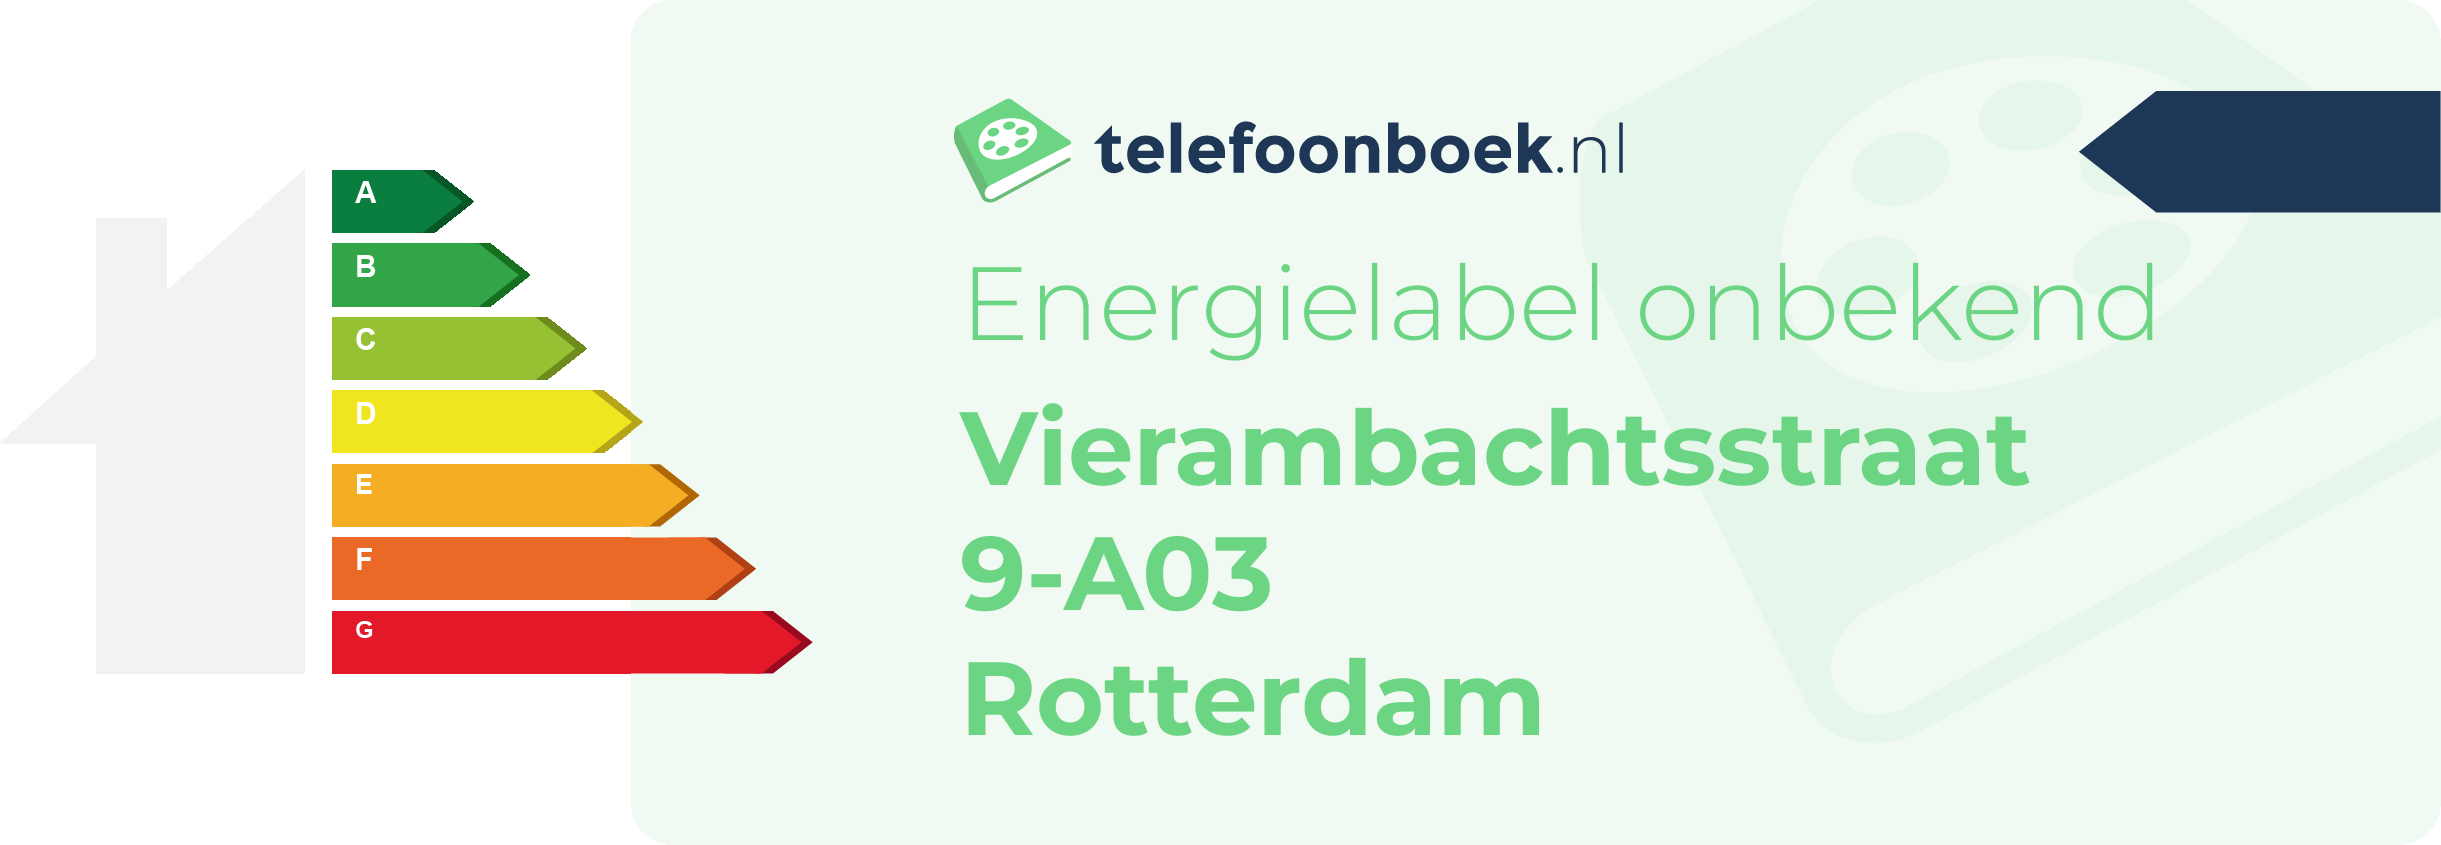 Energielabel Vierambachtsstraat 9-A03 Rotterdam